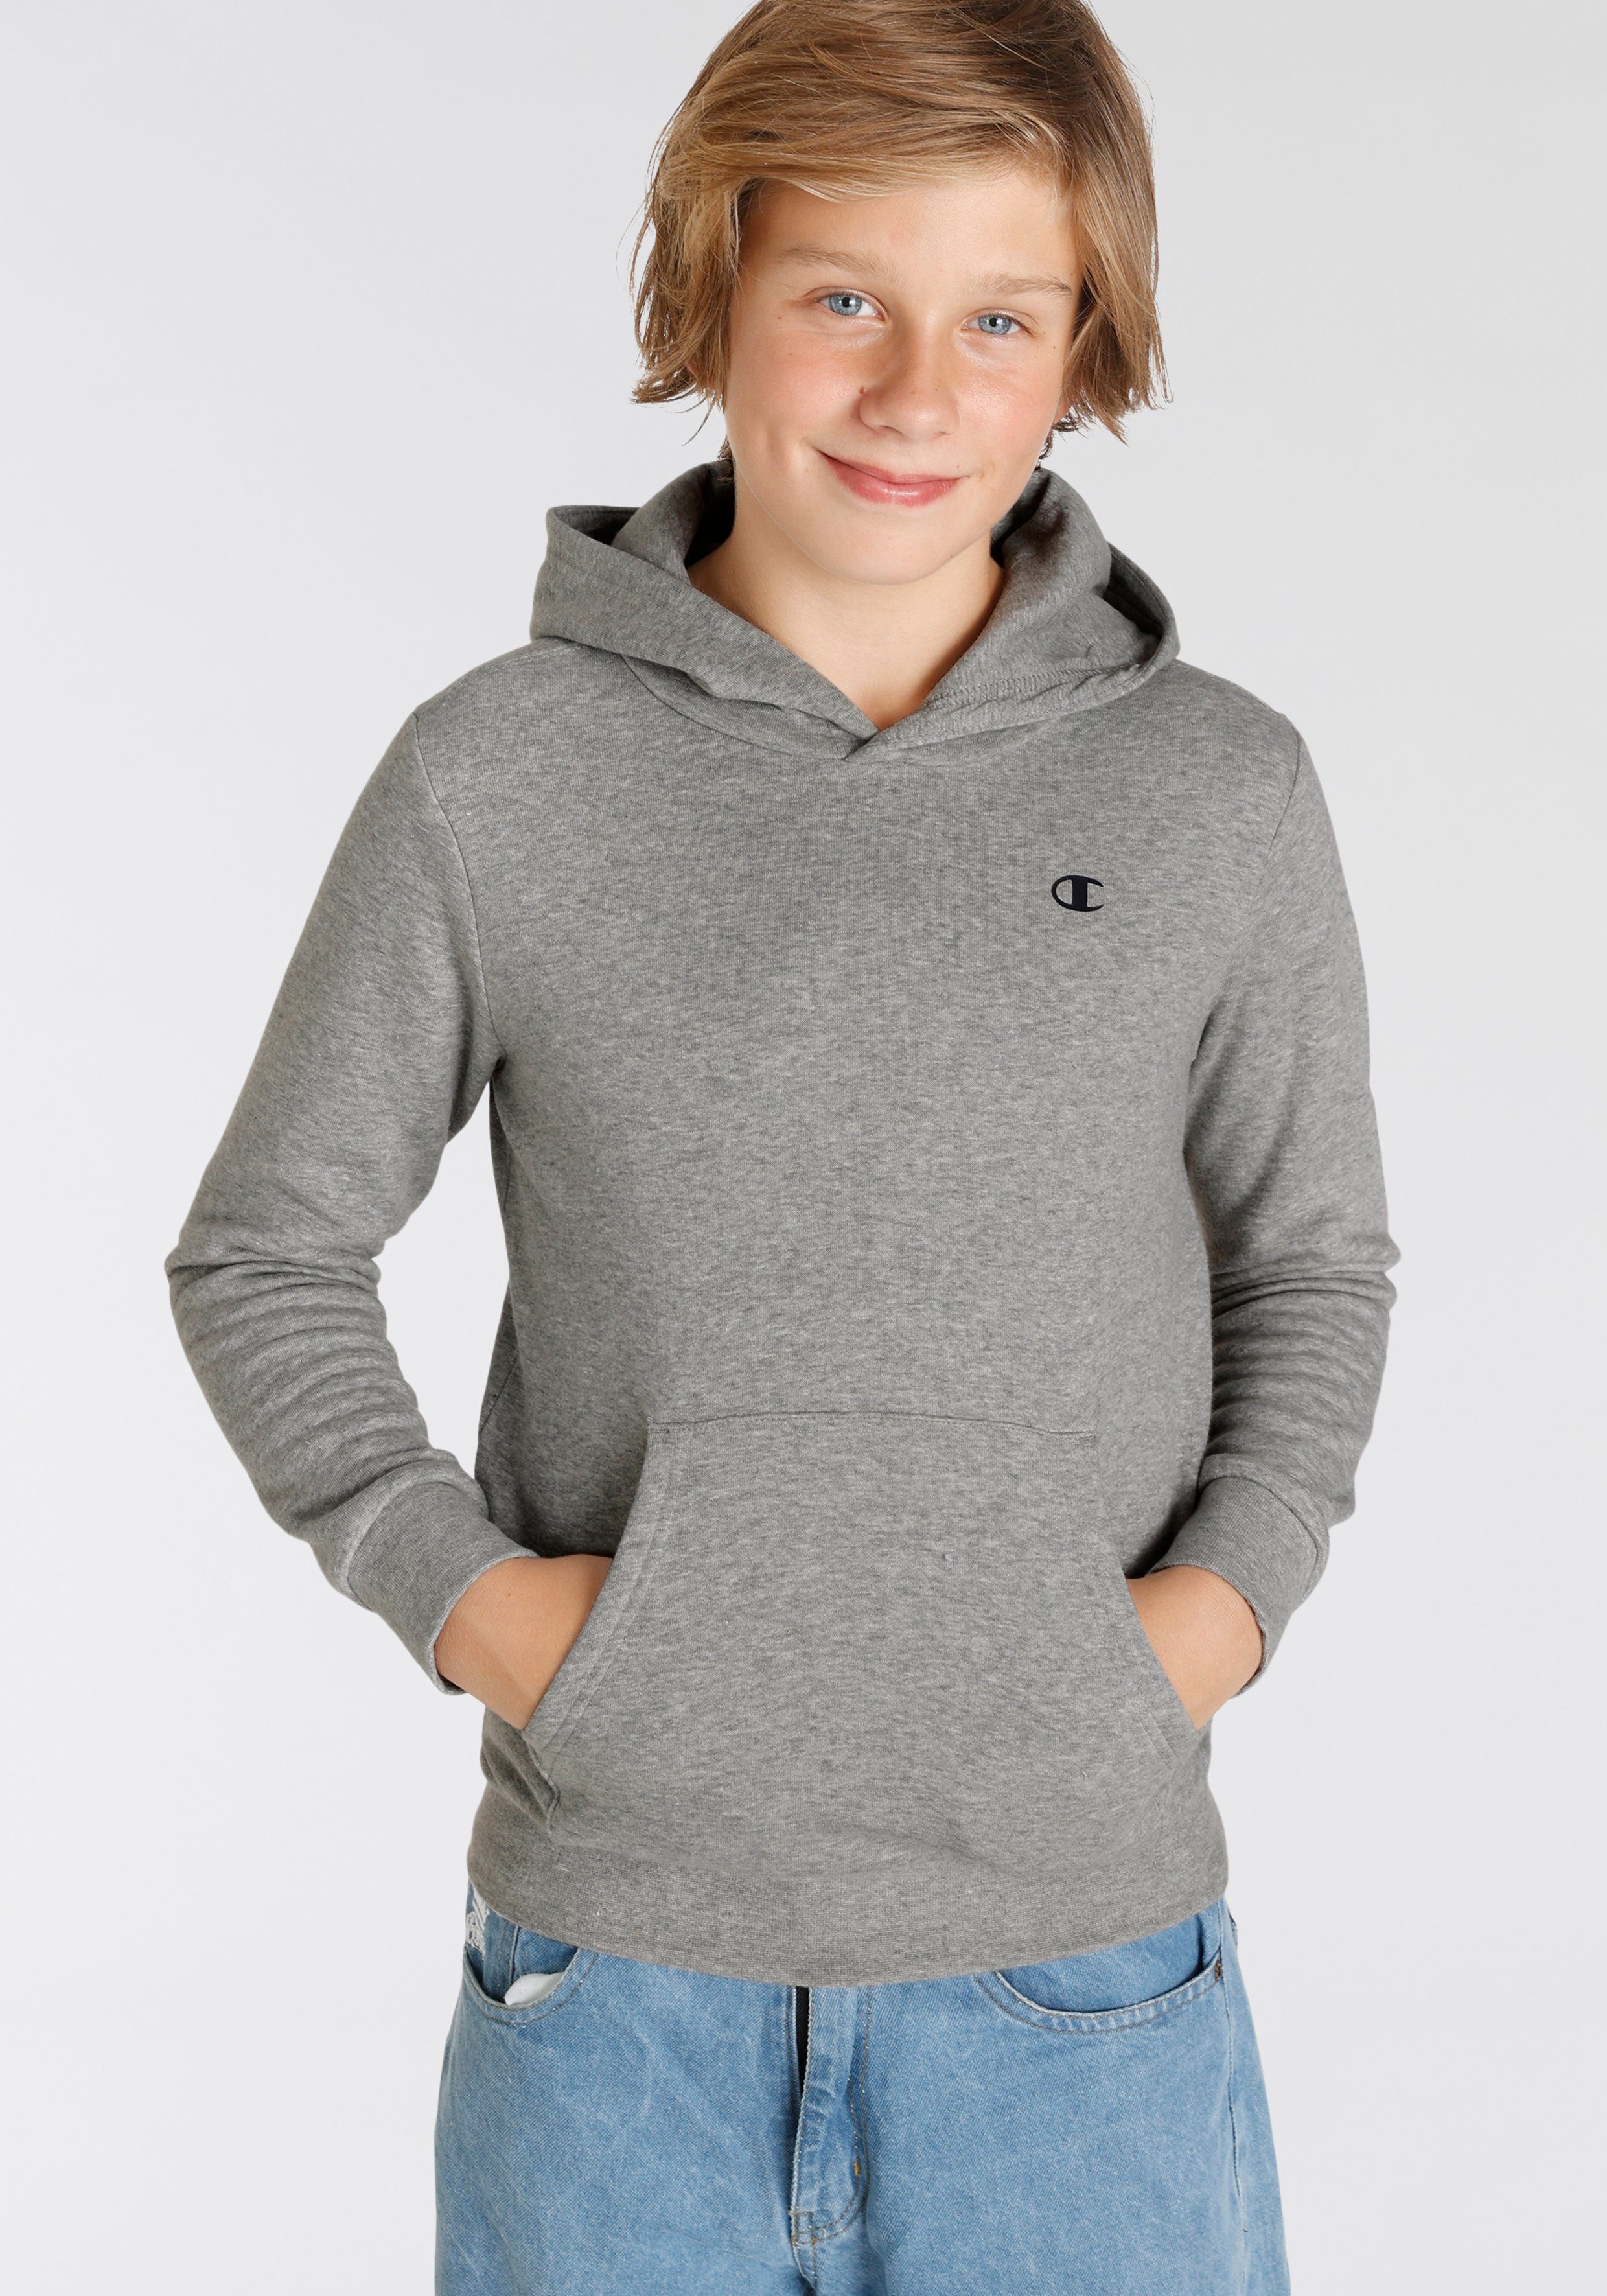 Kinder Sweatshirt Basic für Hooded - grau Champion Sweatshirt